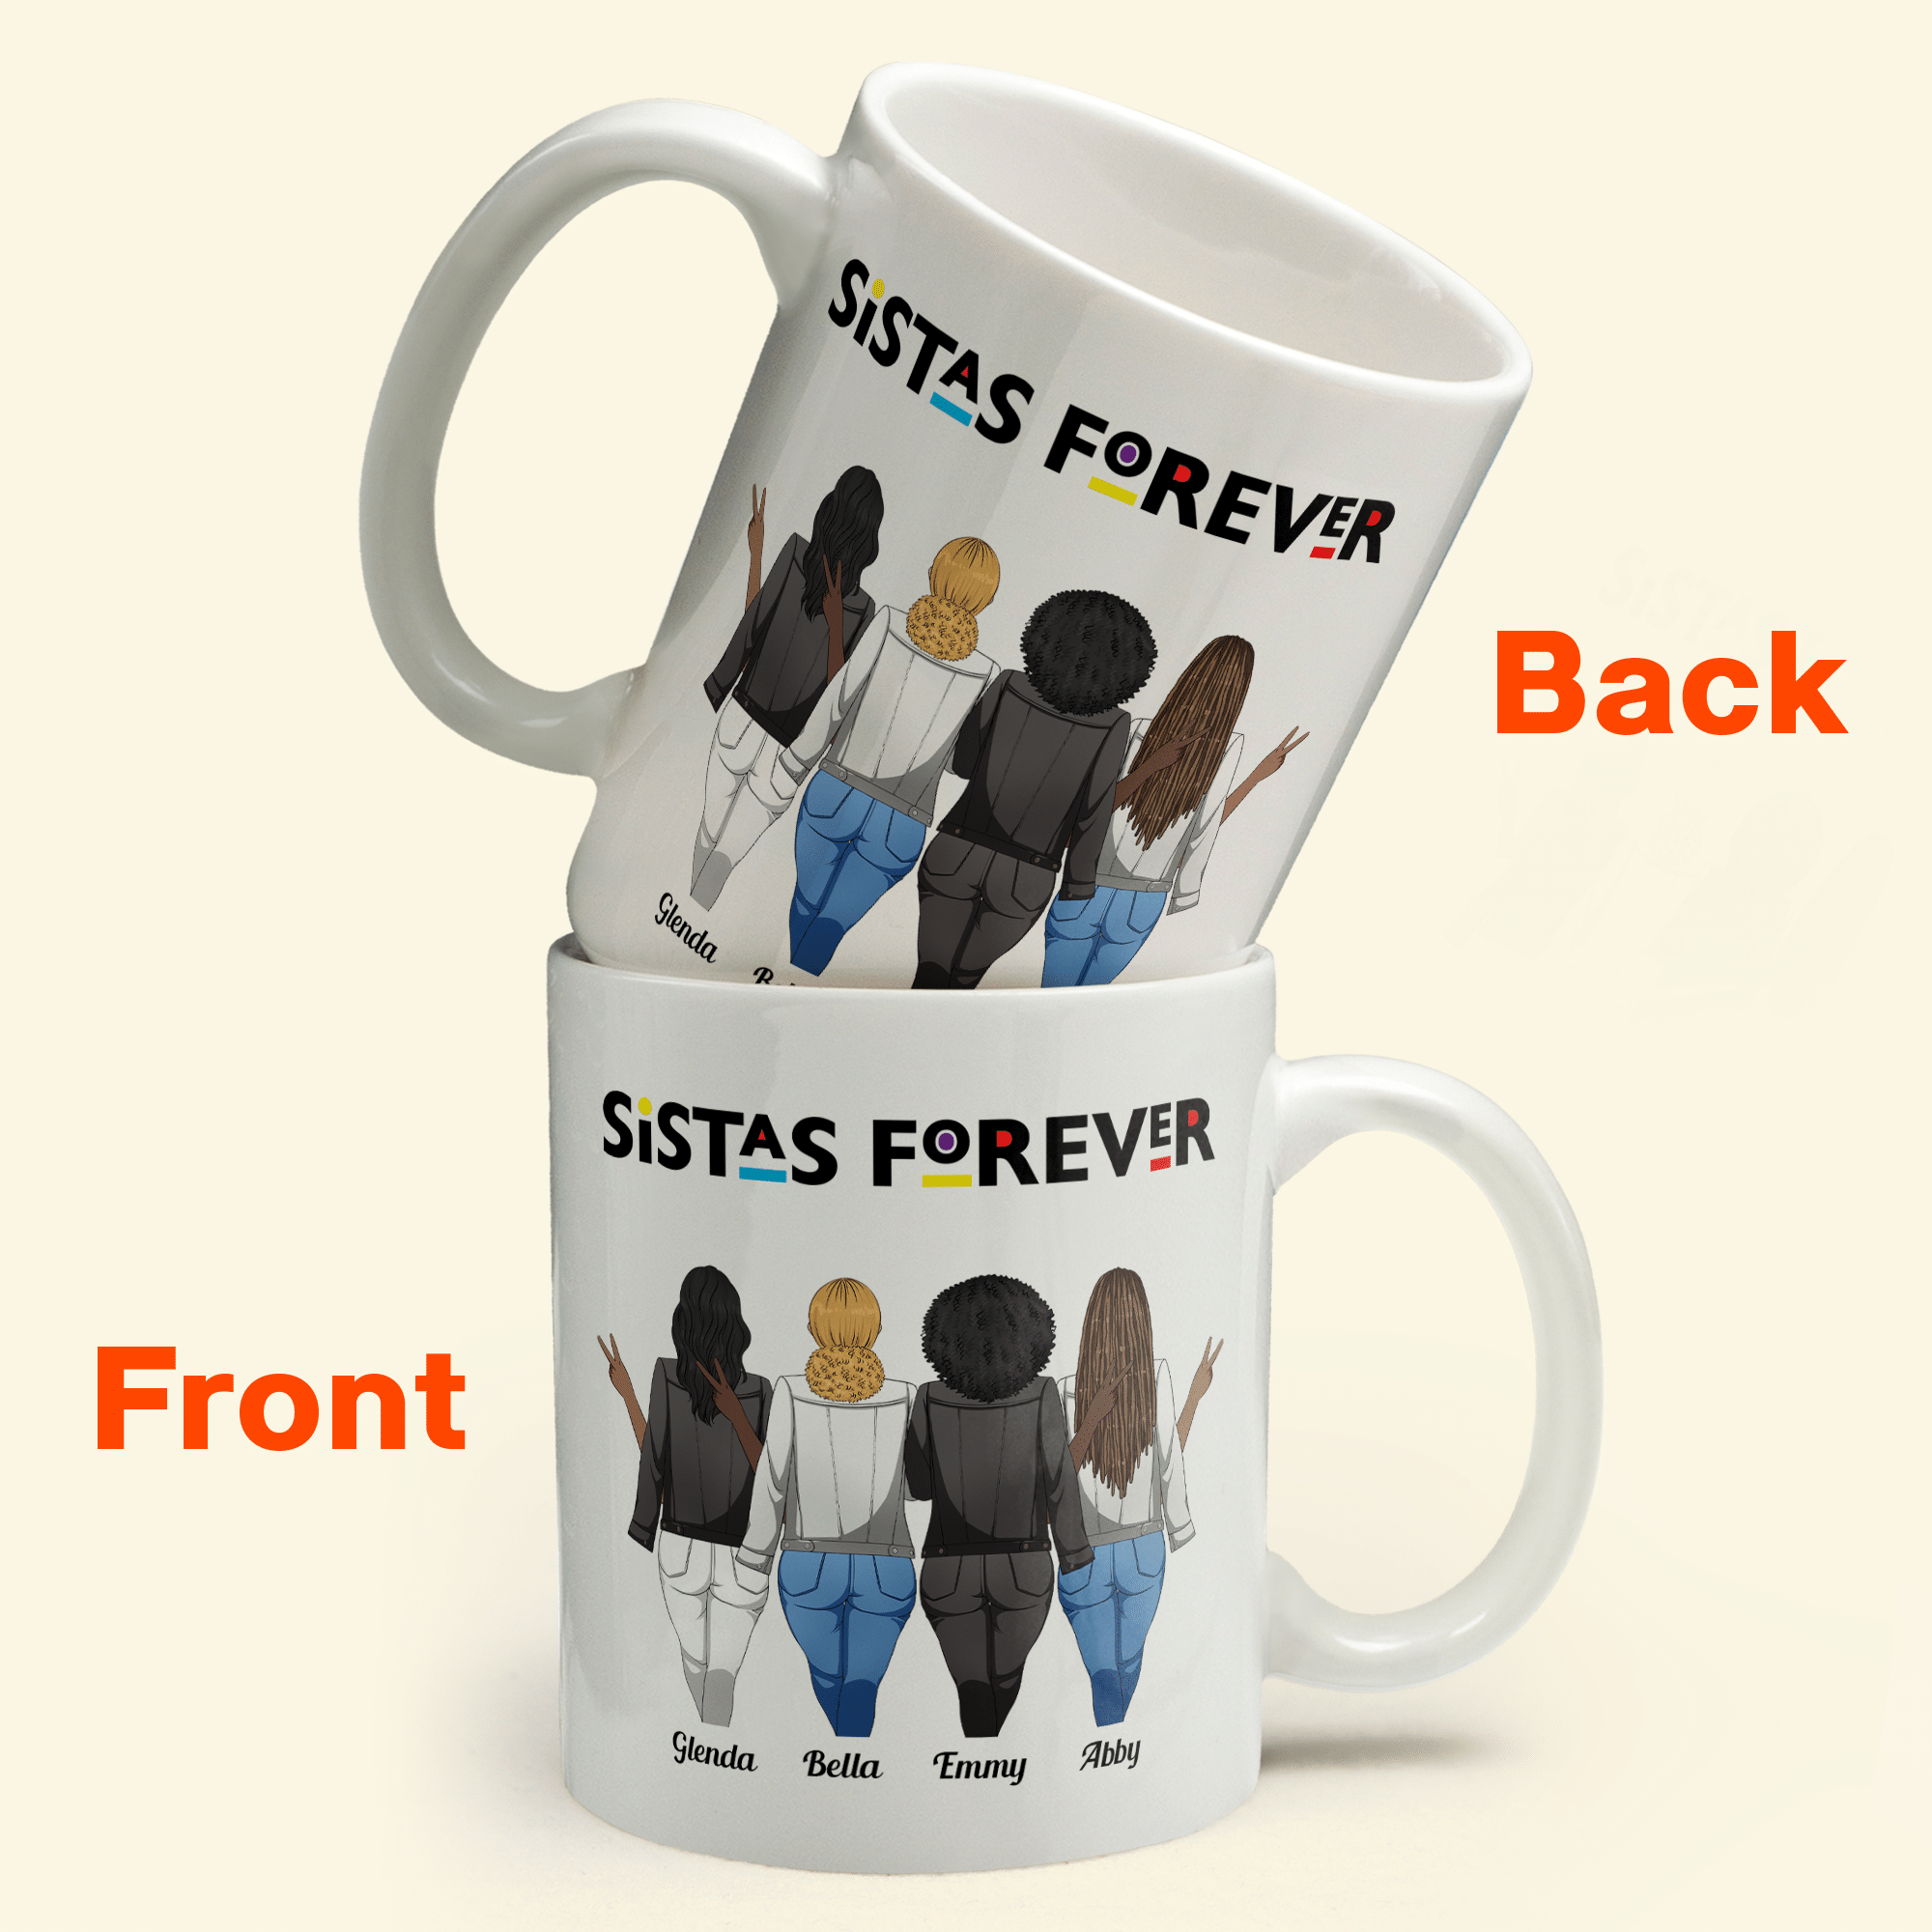 Sistas Forever - Personalized Mug  - Birthday Gift For Sista, Sister, Soul Sister, Best Friend, BFF, Bestie, Friend - Standing Girls Illustration